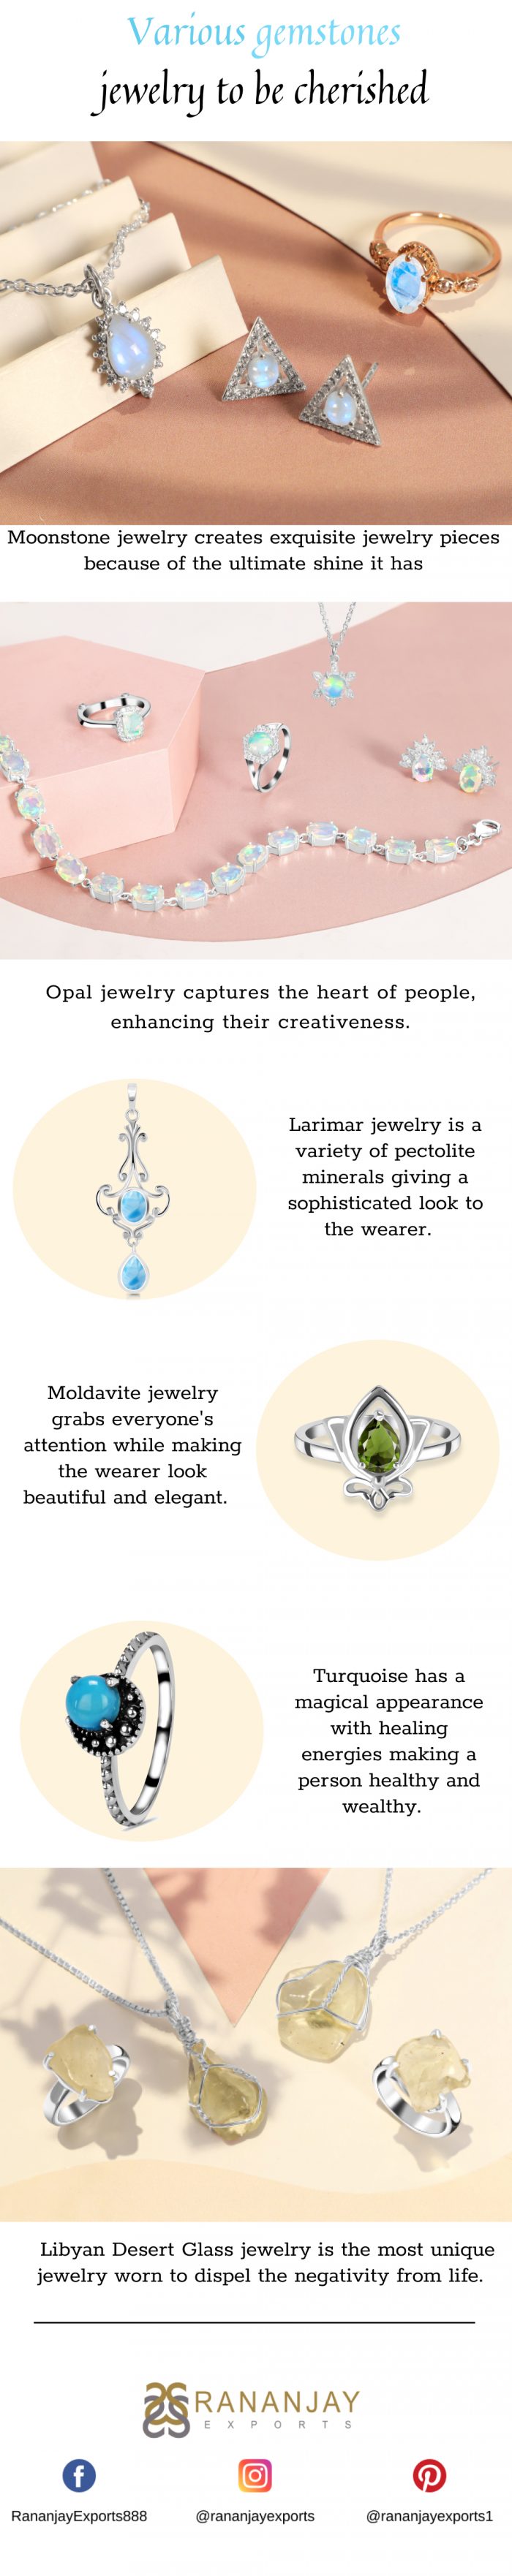 Various Gemstones Jewelry to be Cherished